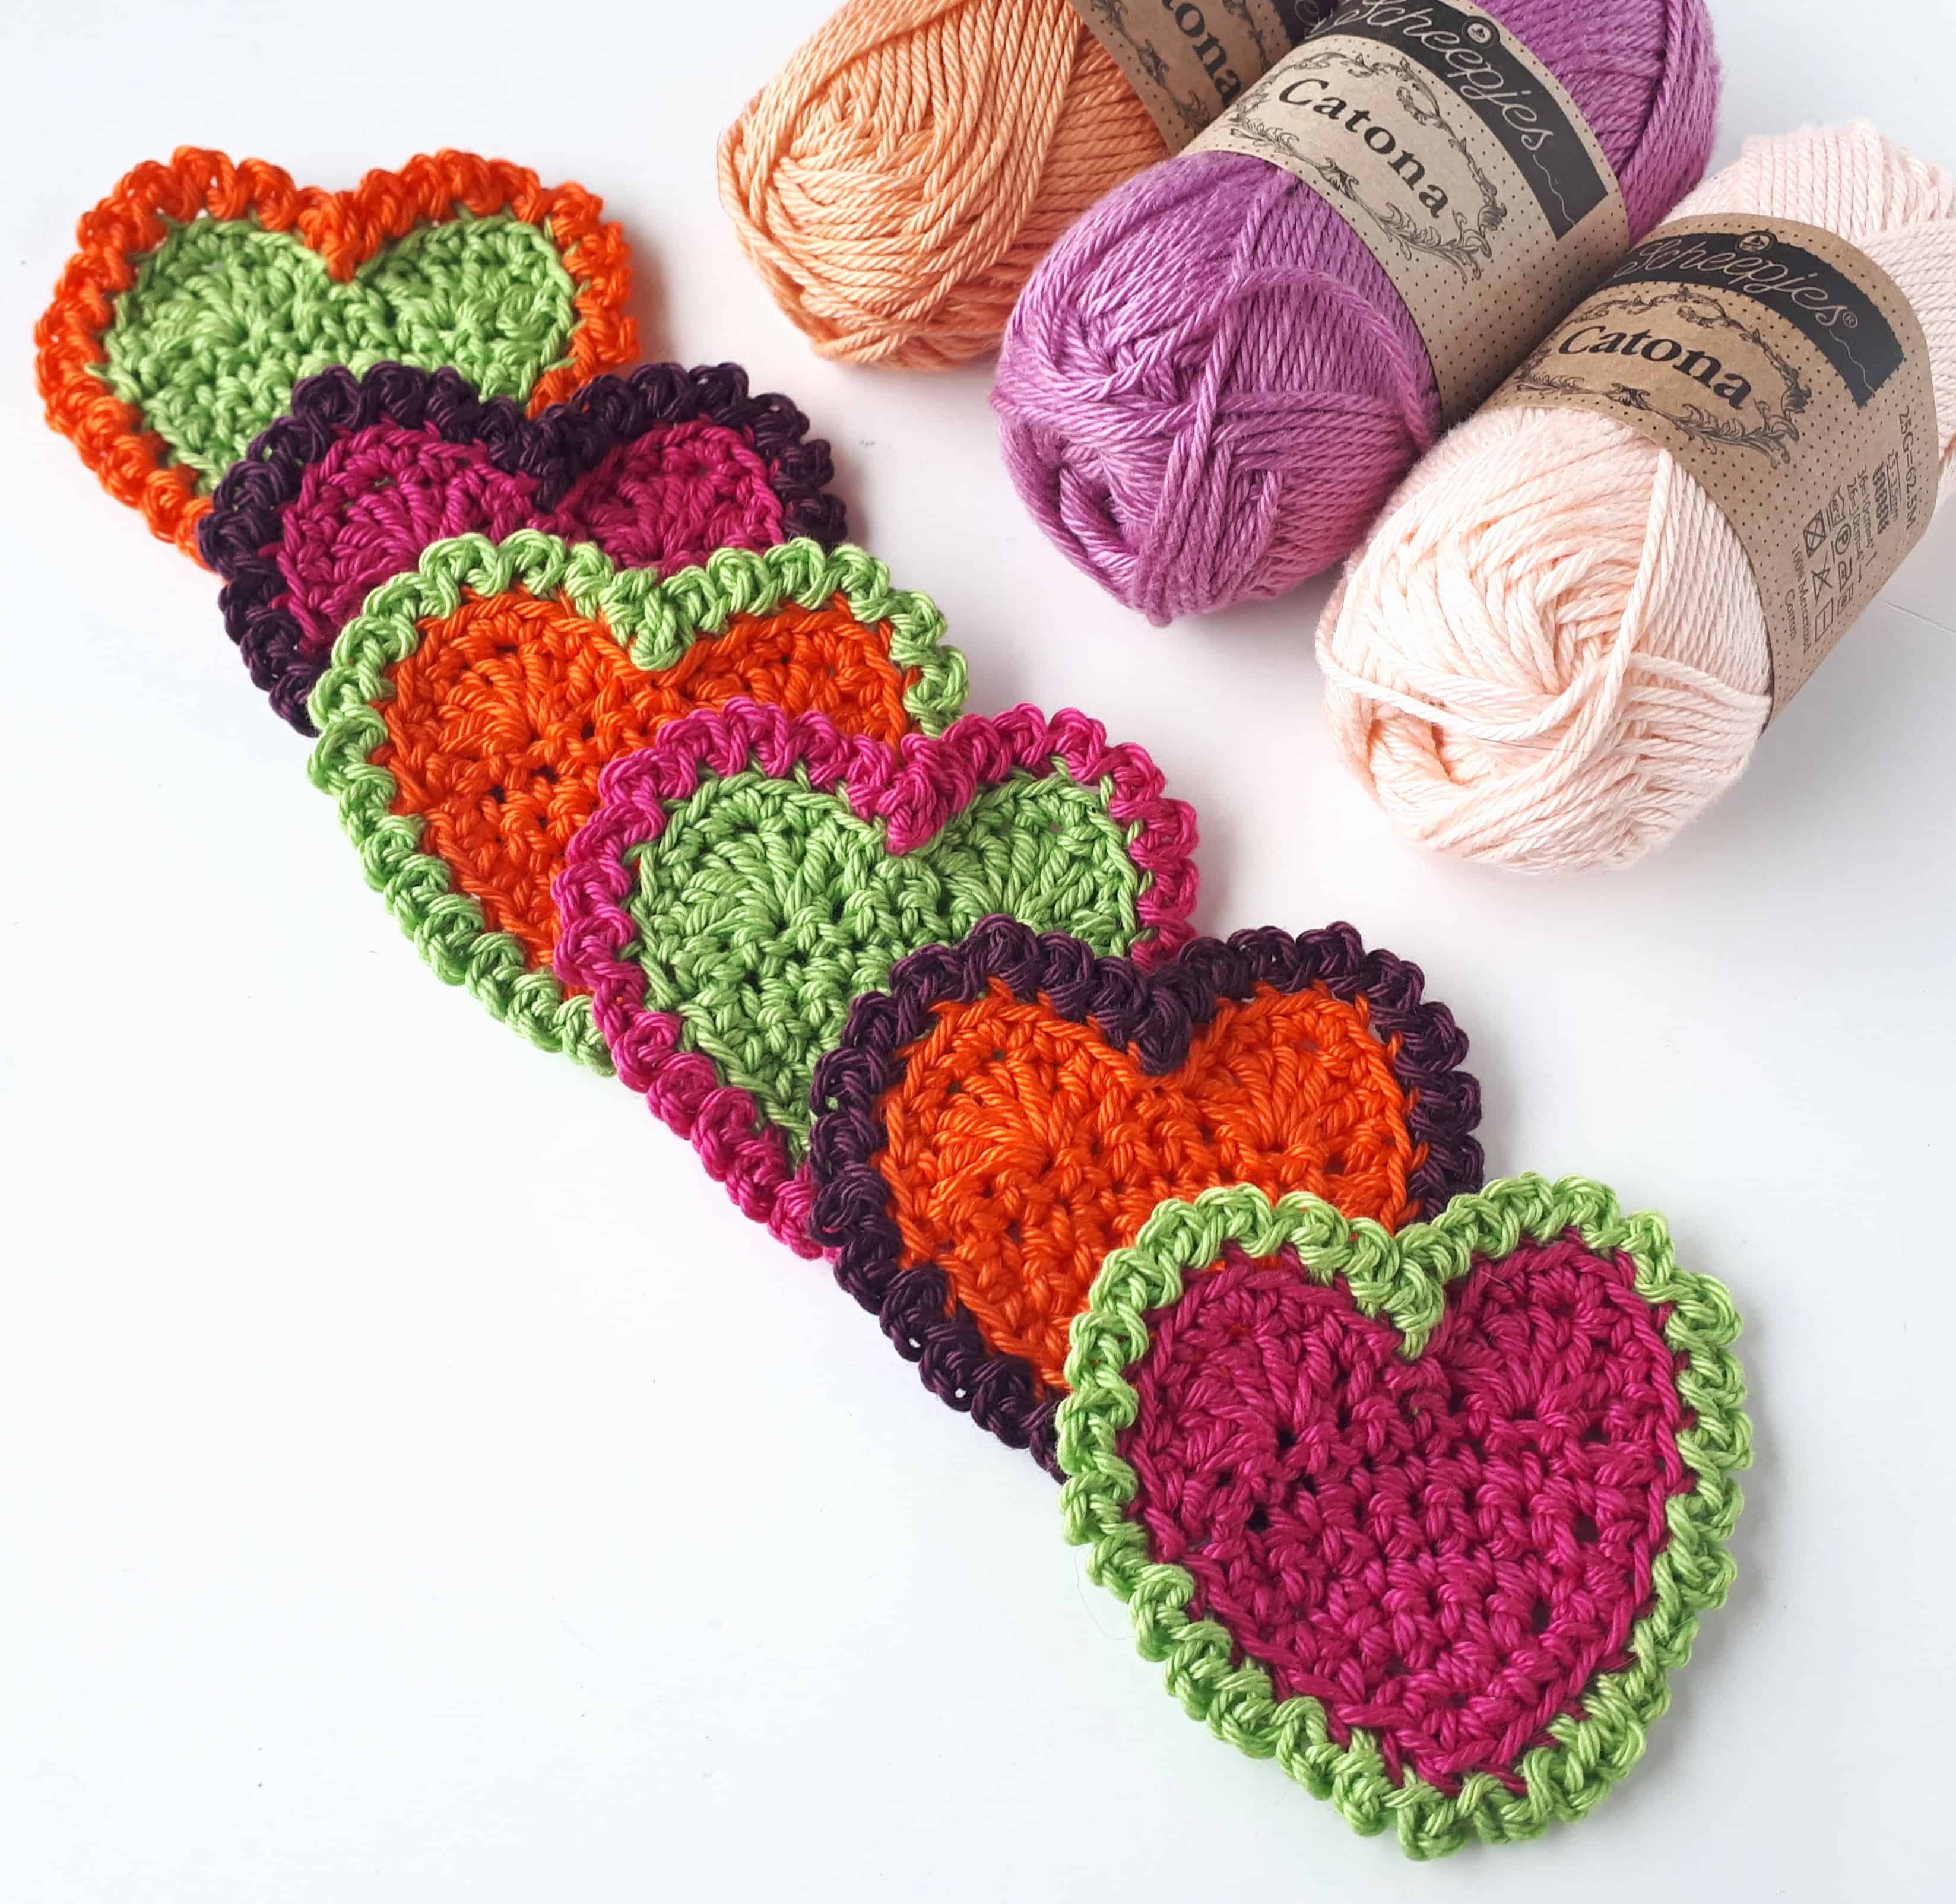 crochet hearts and balls of yarn